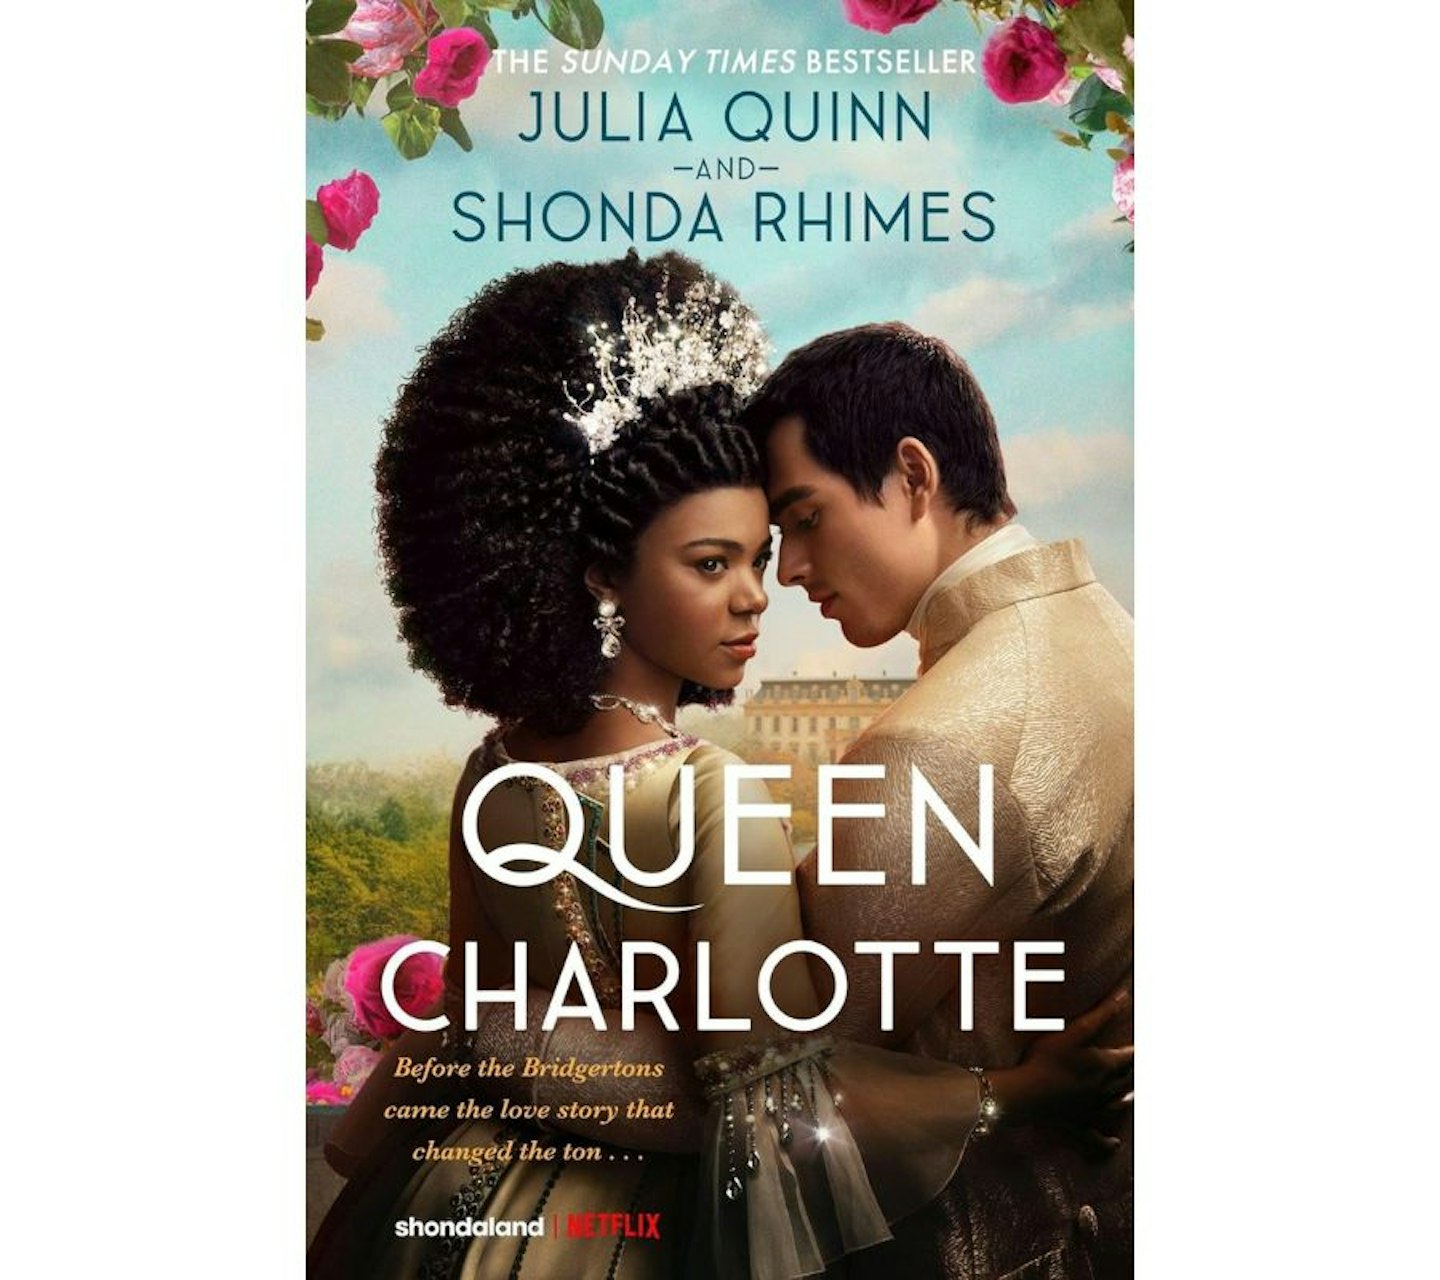 Queen Charlotte by Julia Quinn and Shona Rhimes